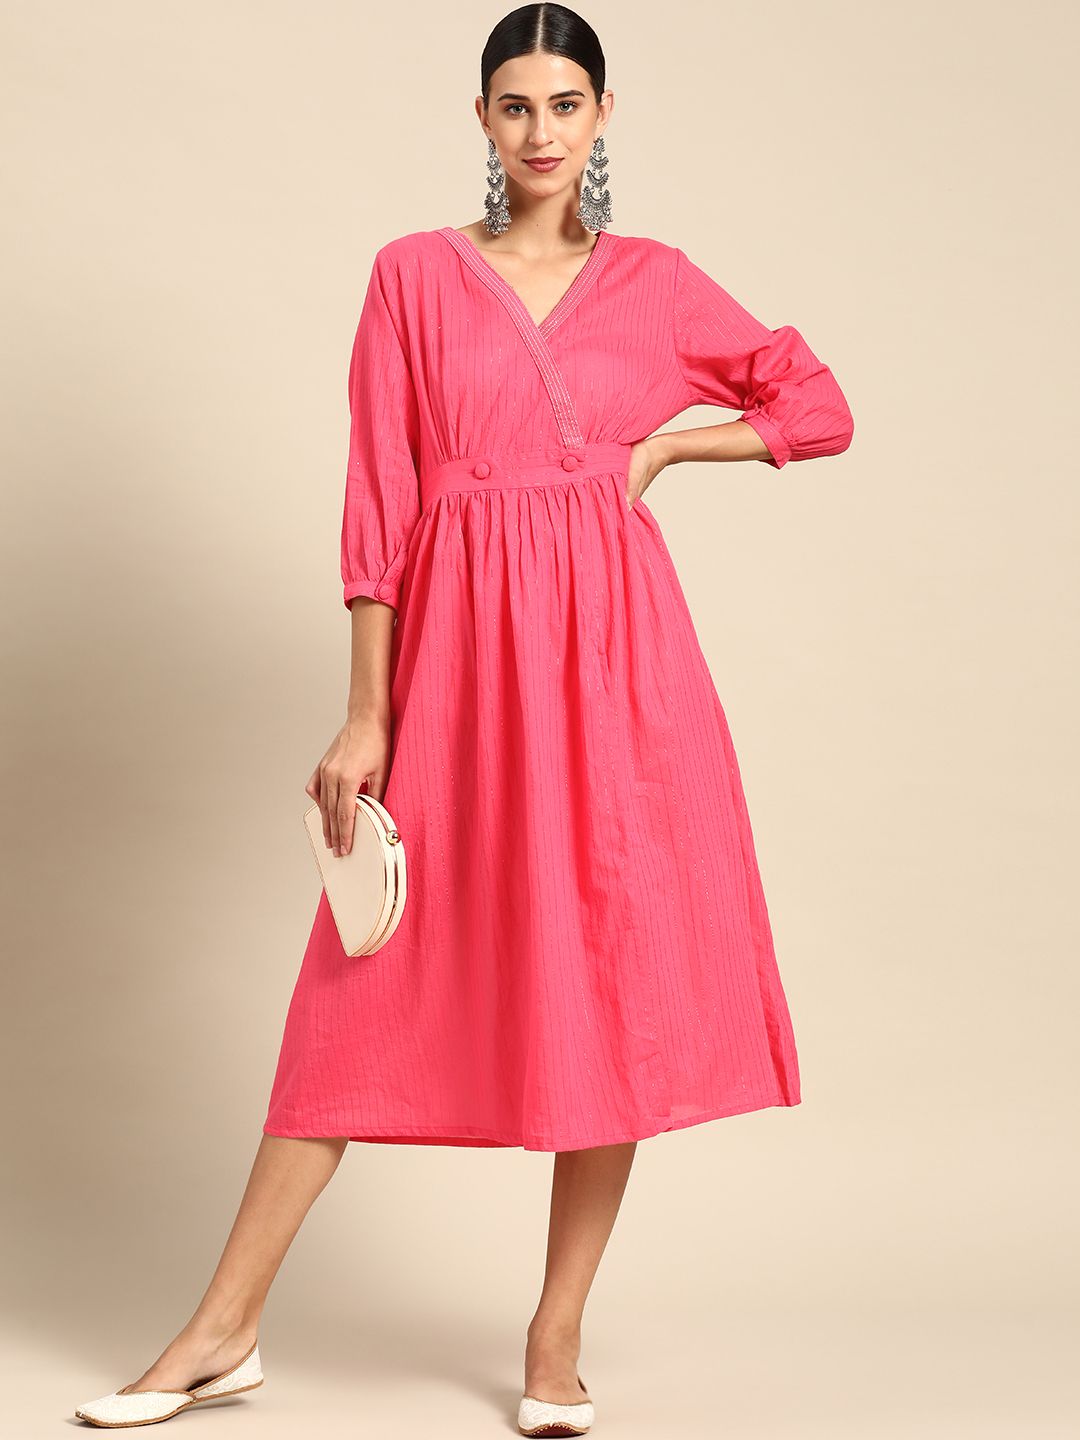 Anouk Pink & Golden Pure Cotton Striped Ethnic Midi Dress Price in India